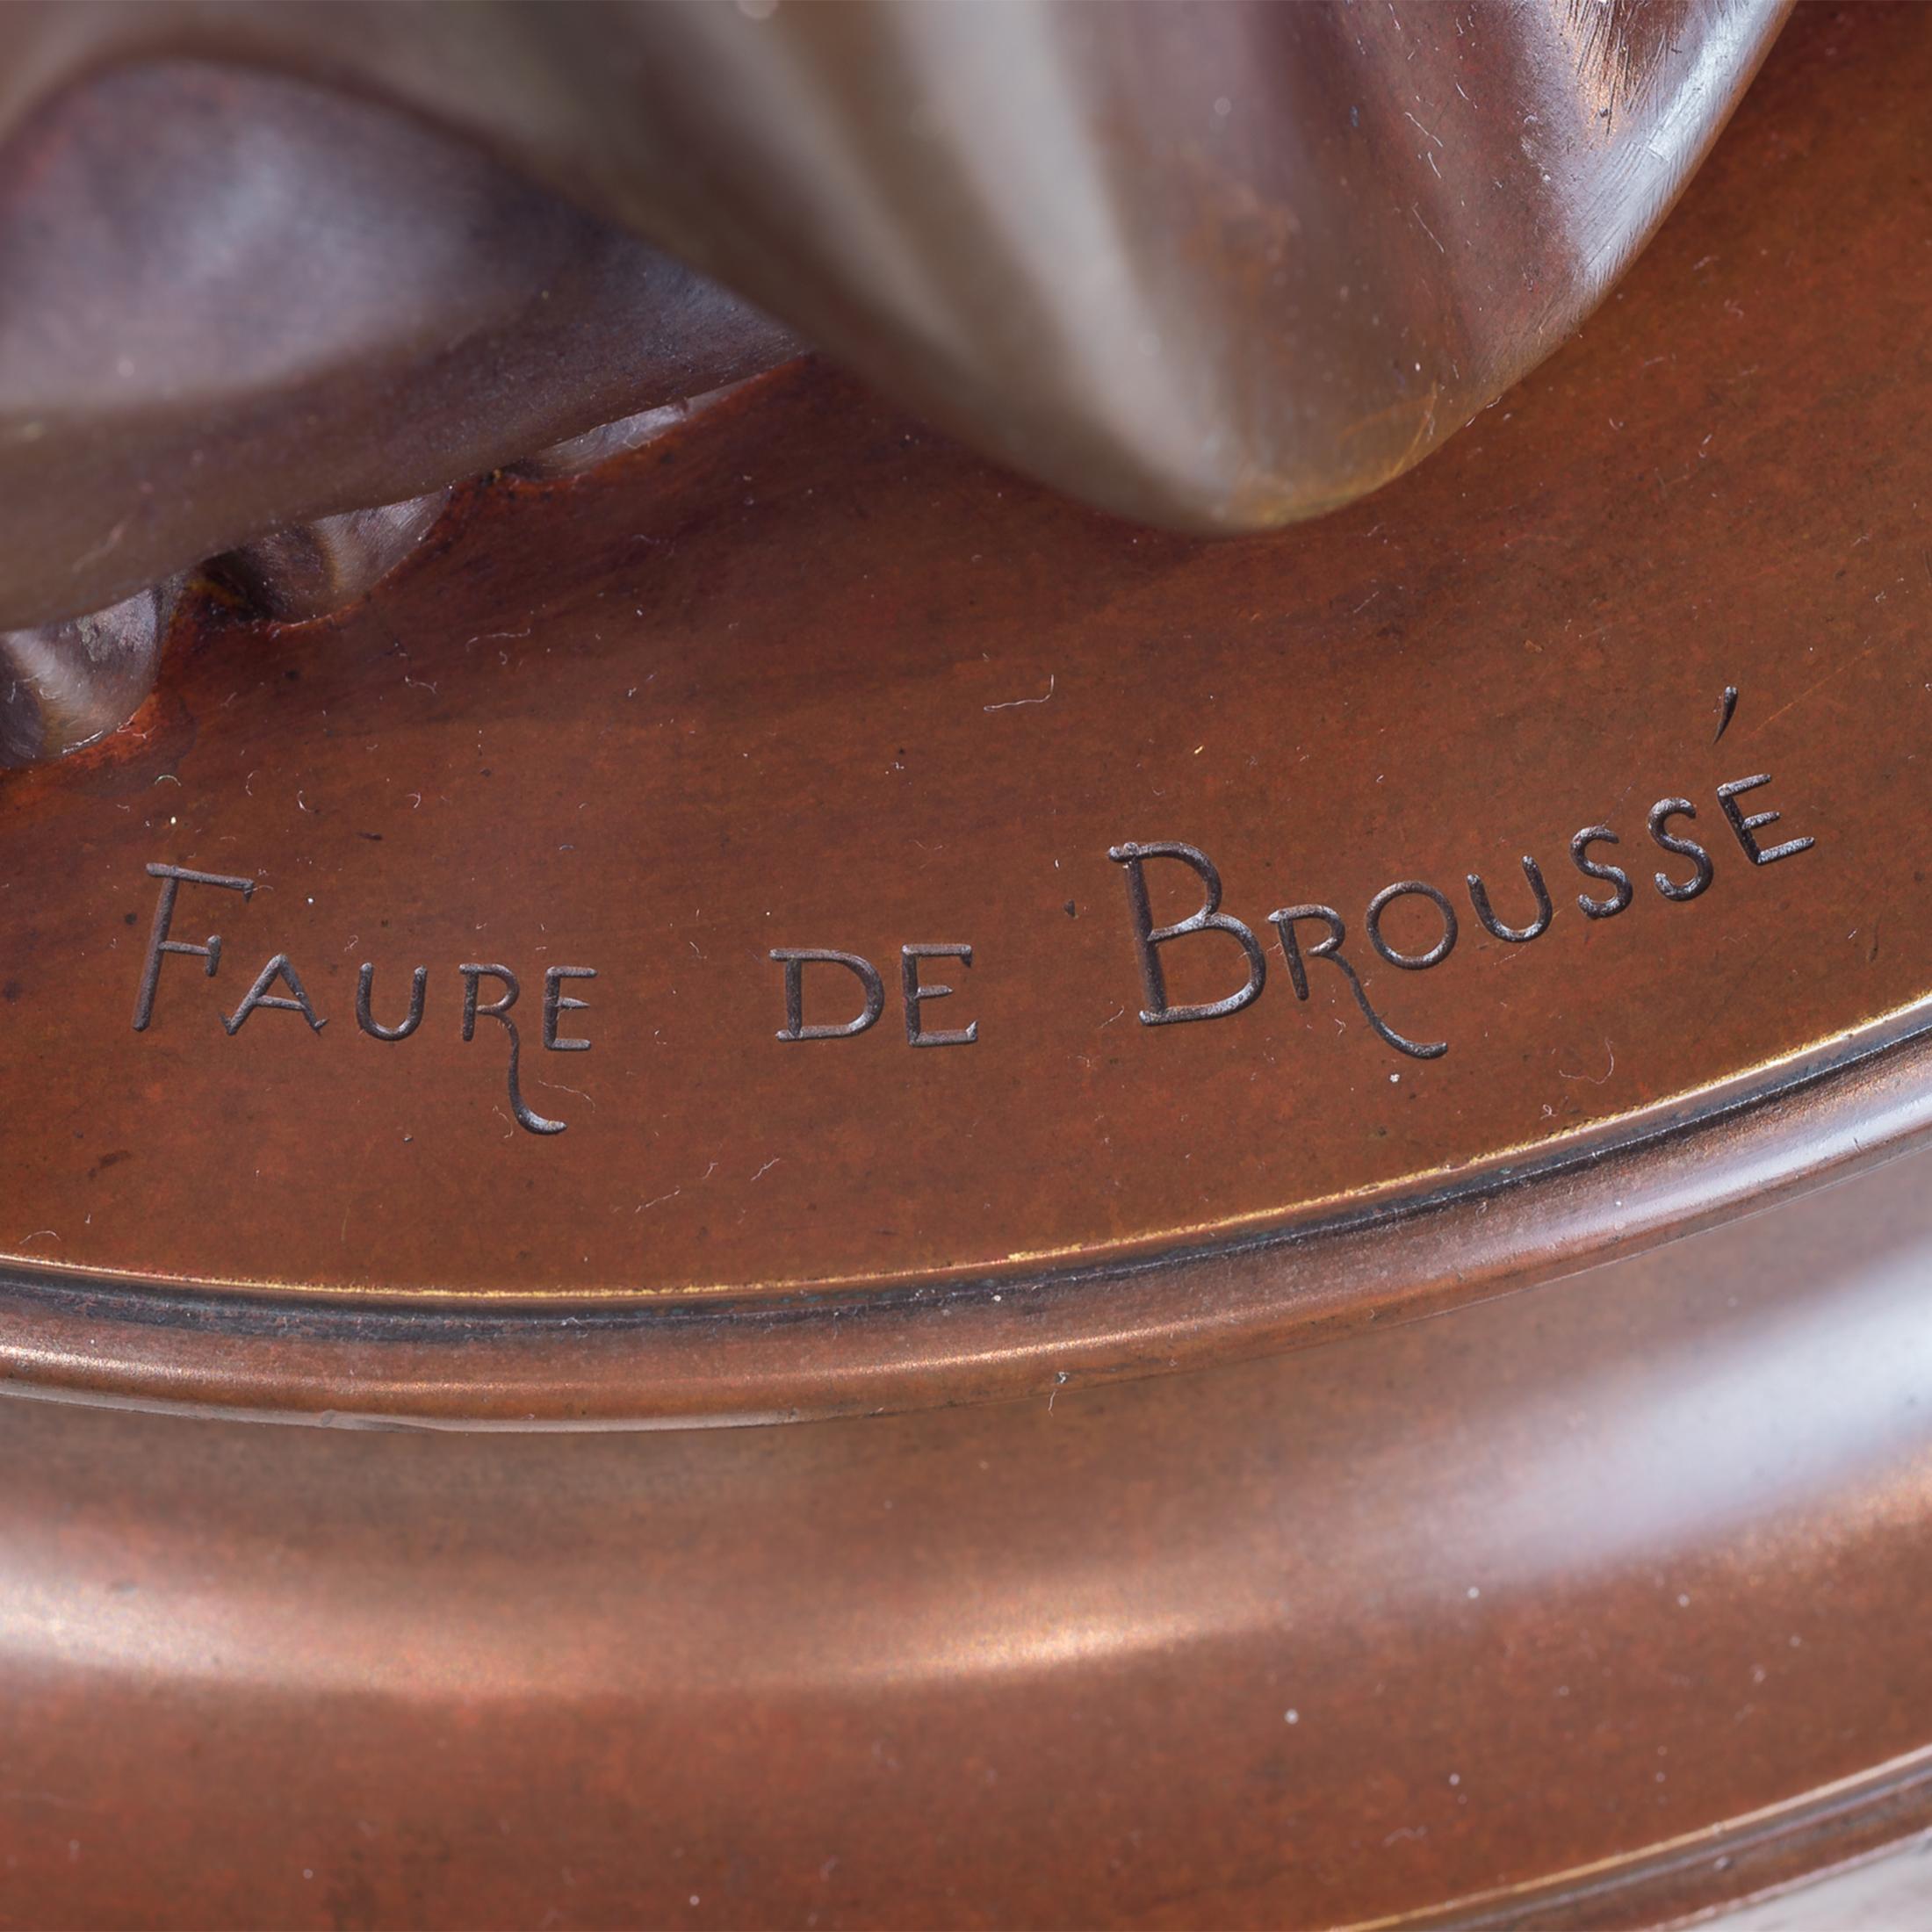 VINCENT DESIRE RAURE DE BROUSSE
French, (1876-1908)

Bronze Sculpture of Lovers

Inscribed ‘Faure de Brousse’         
H 31 in. x W 18.50 in. x D 15.50 in.